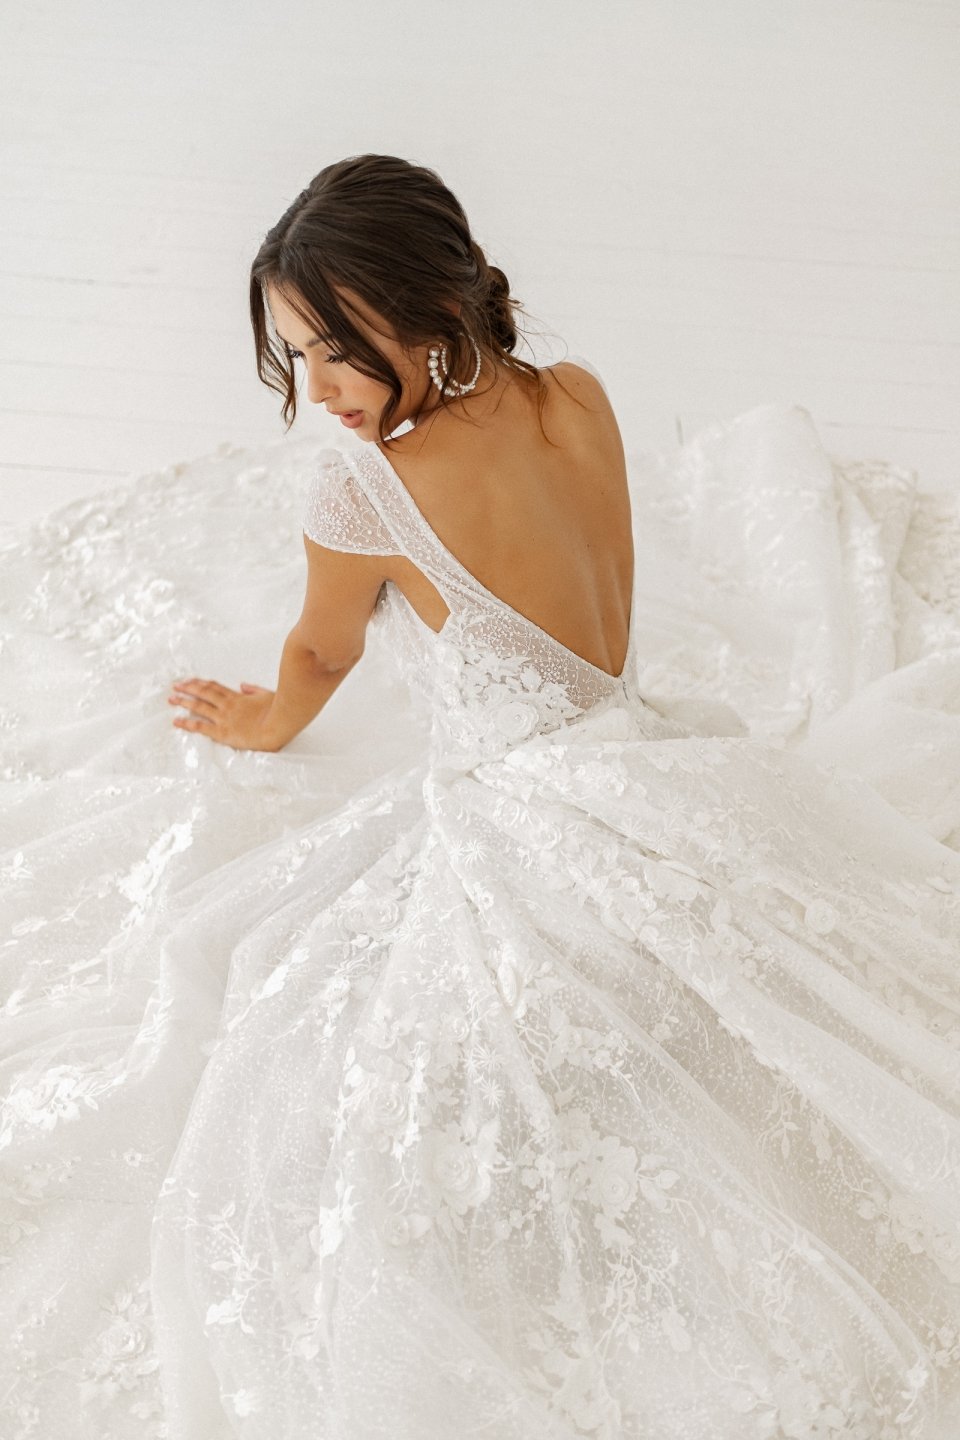 blanc-de-blanc-bridal-boutique-pittsburgh-cleveland-dress-wedding-gown-DARLING_Cherie-byOui-.jpeg